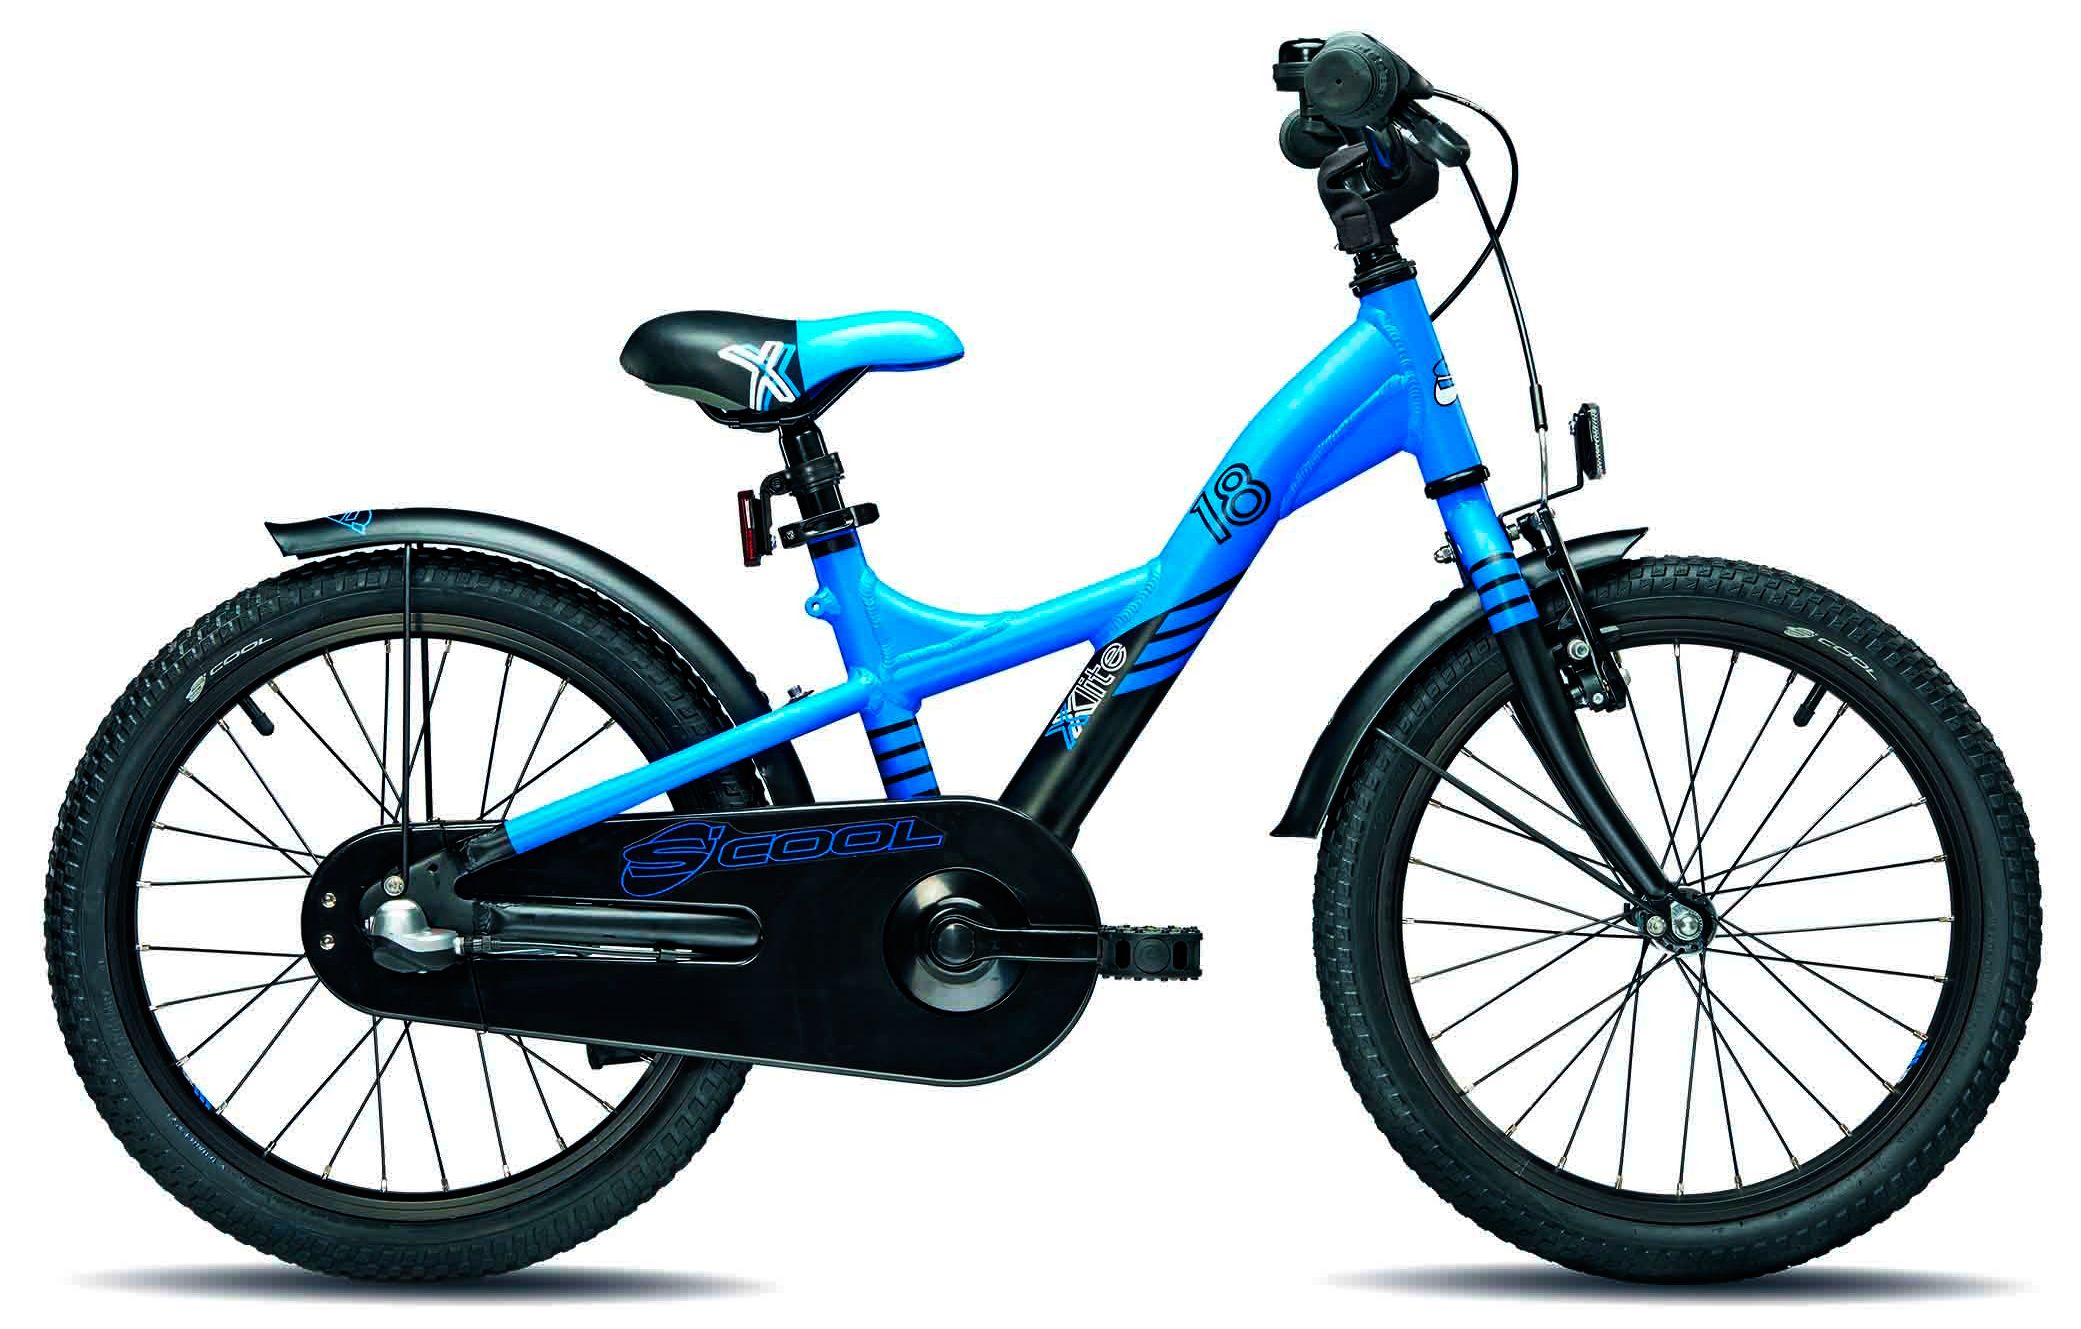  Отзывы о Детском велосипеде Scool XXlite 18-3 2015